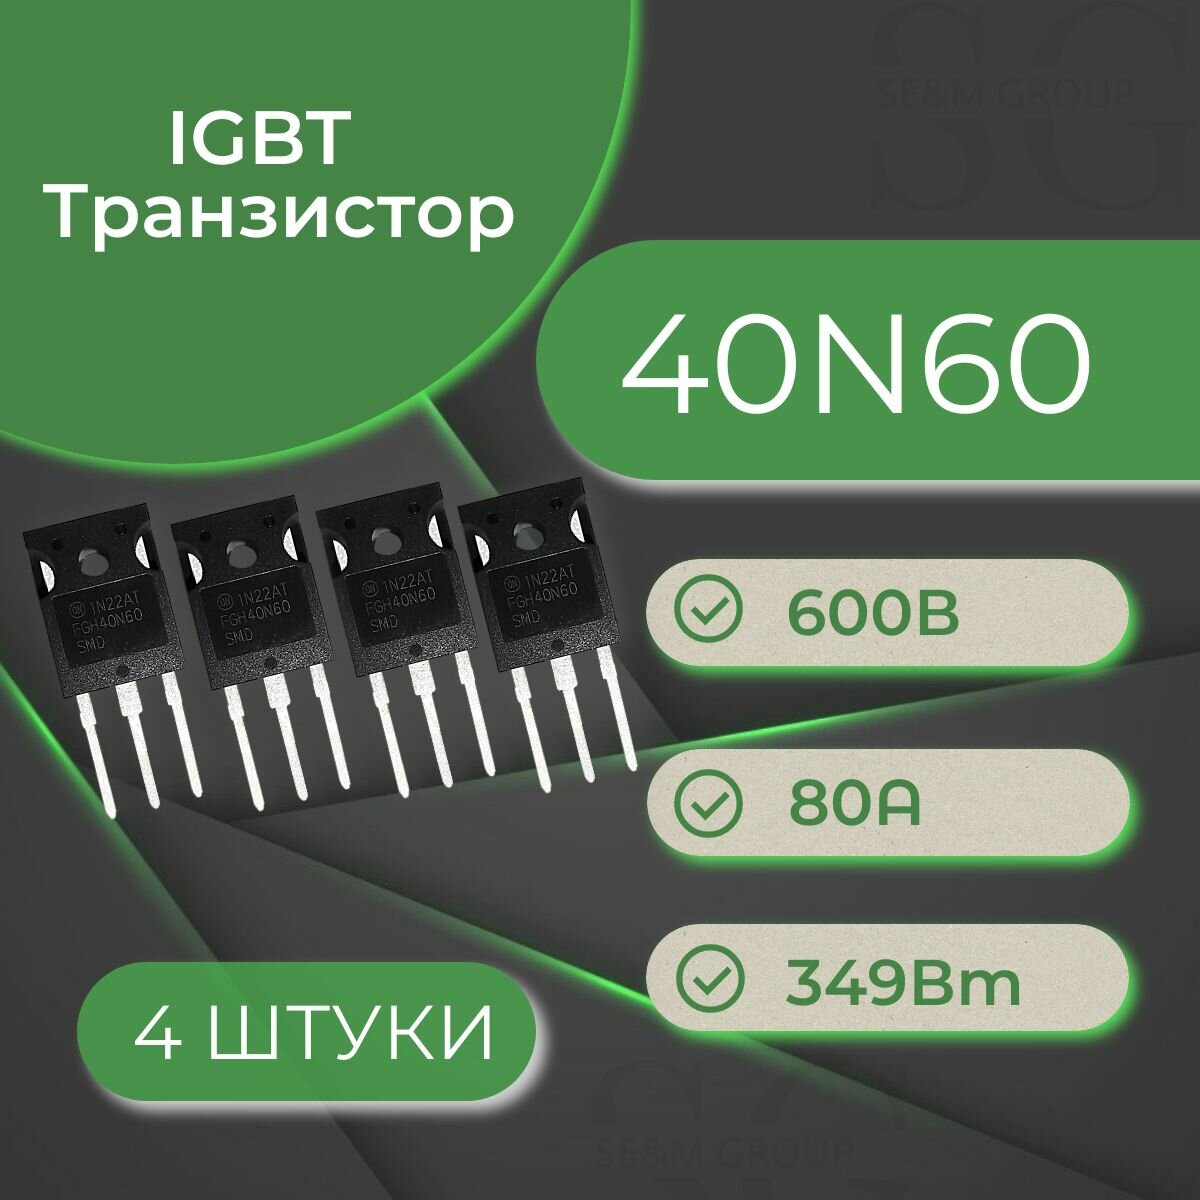 4 шт IGBT-транзистор FGH40N60SMD 600В 80А 349Вт ТO-247